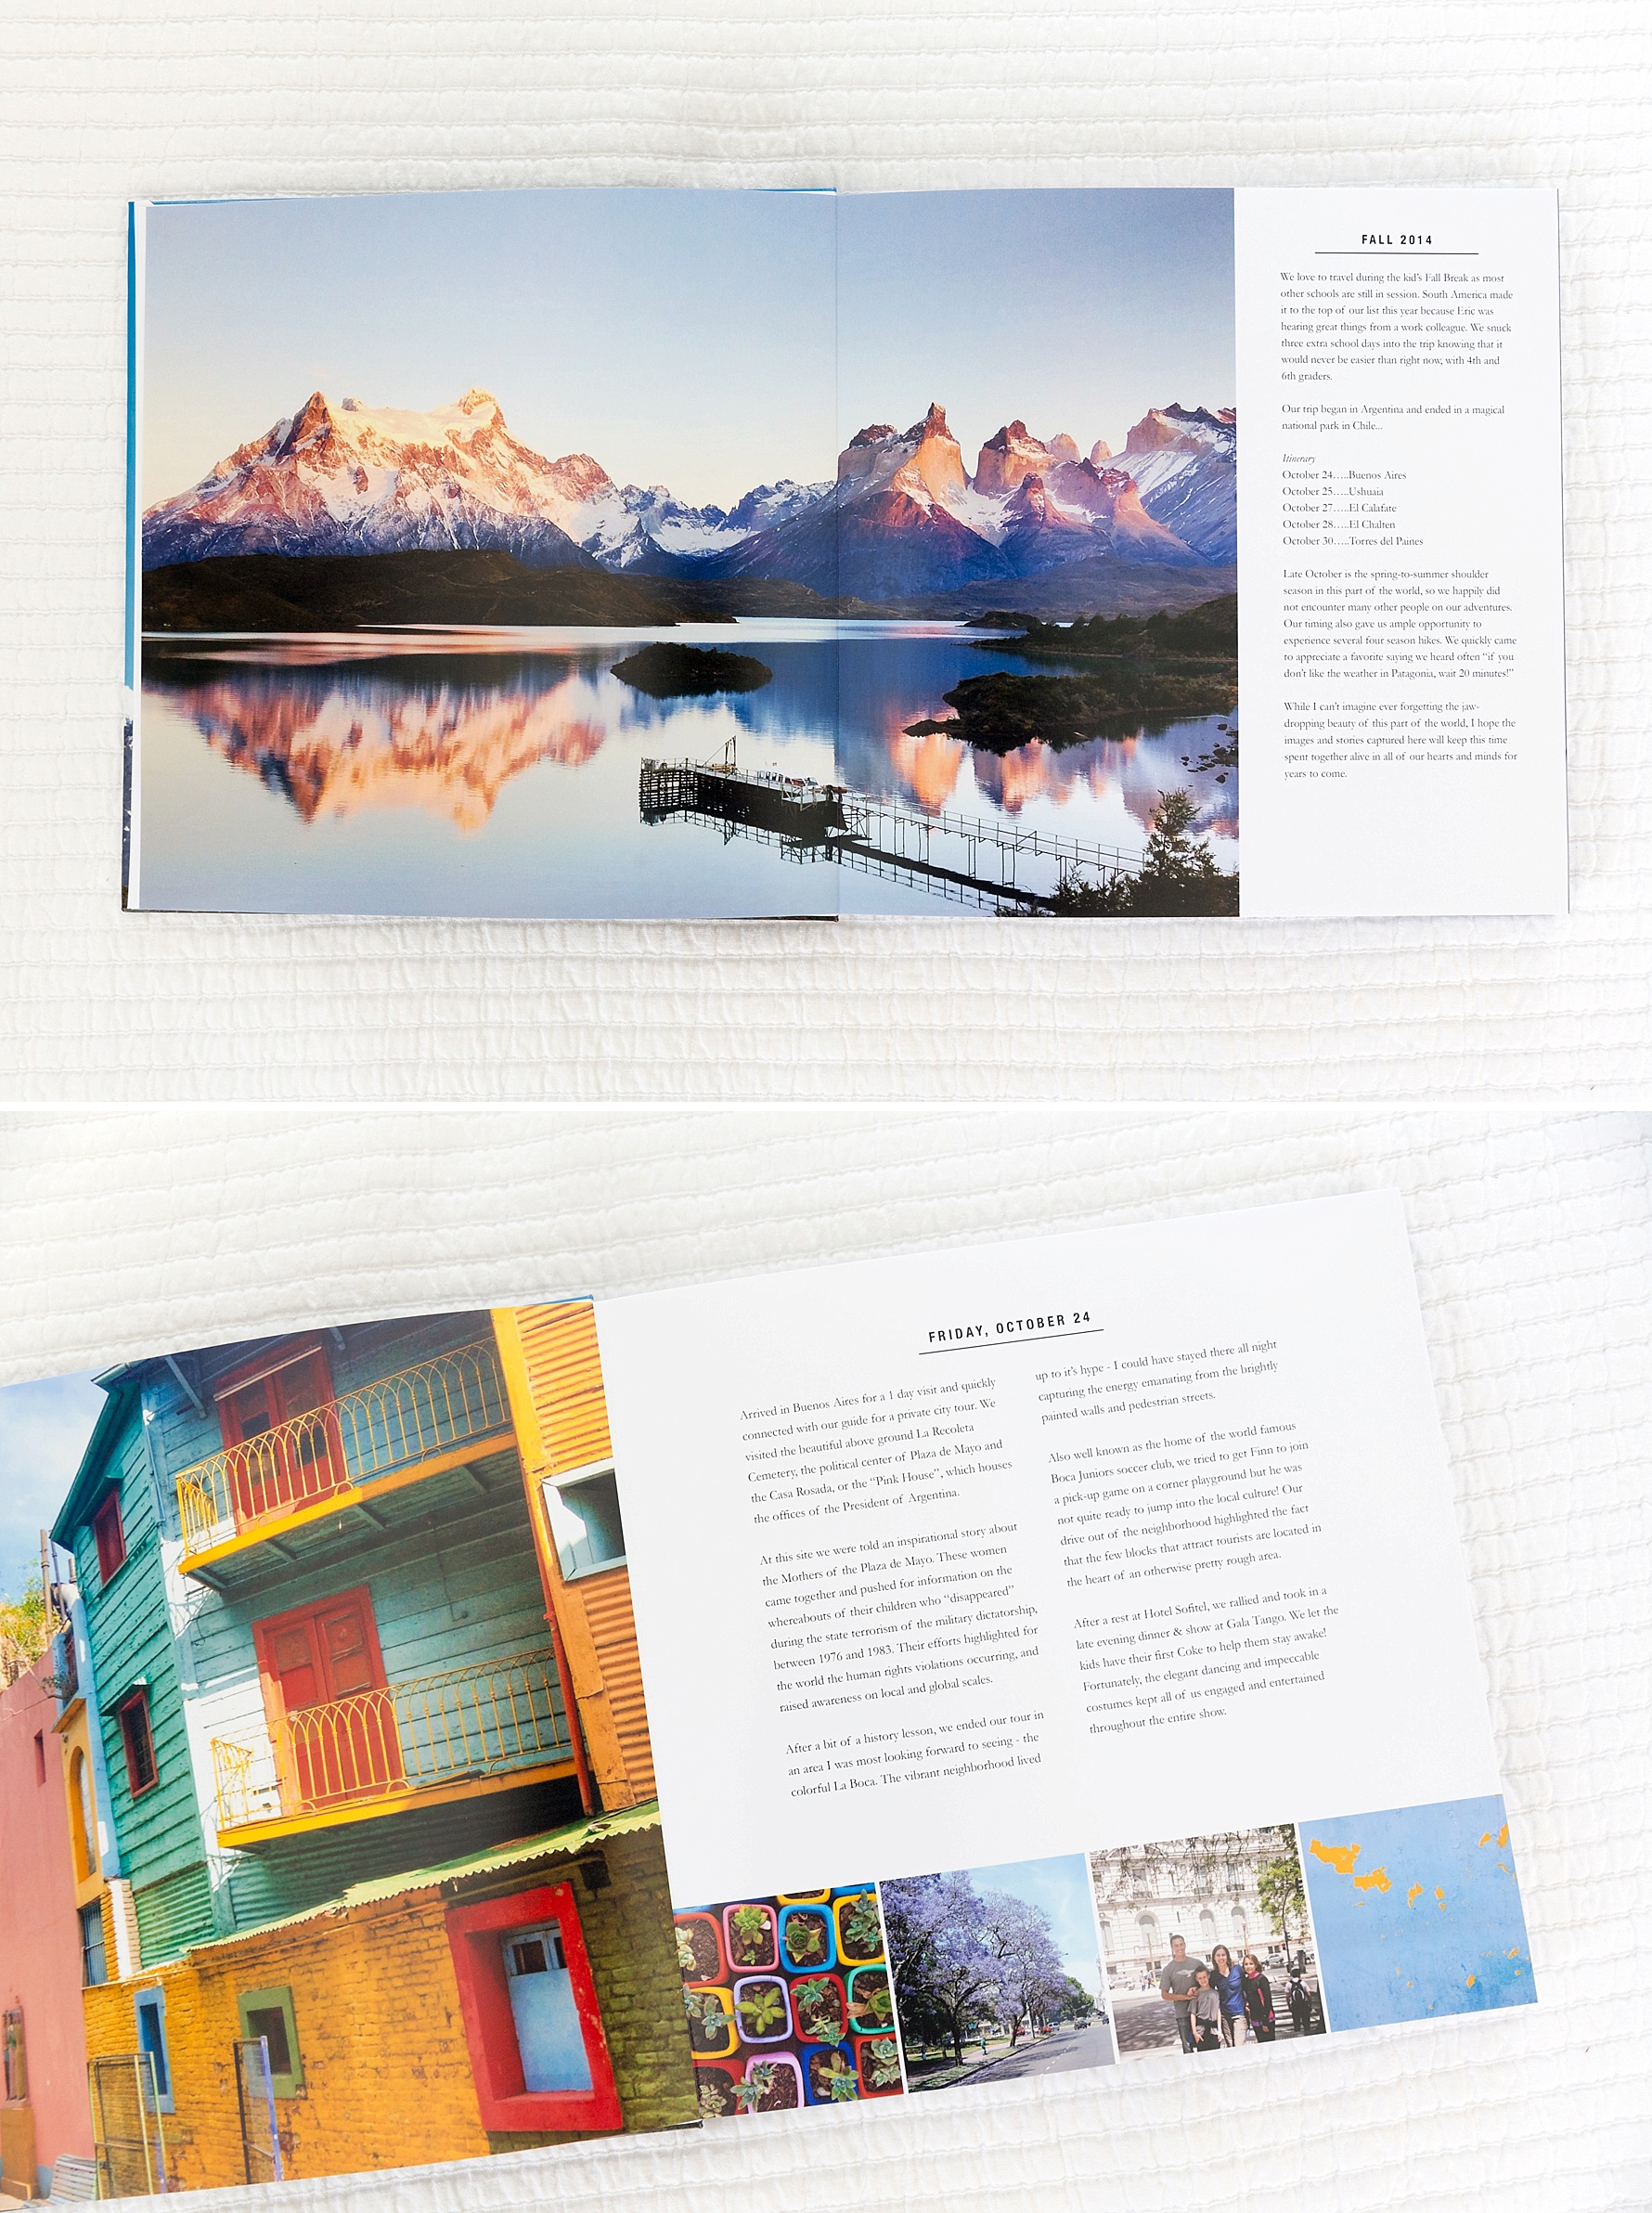 Document Your Travels | Patagonia Vacation Photo Book | www.suzanneobrienstudio.com